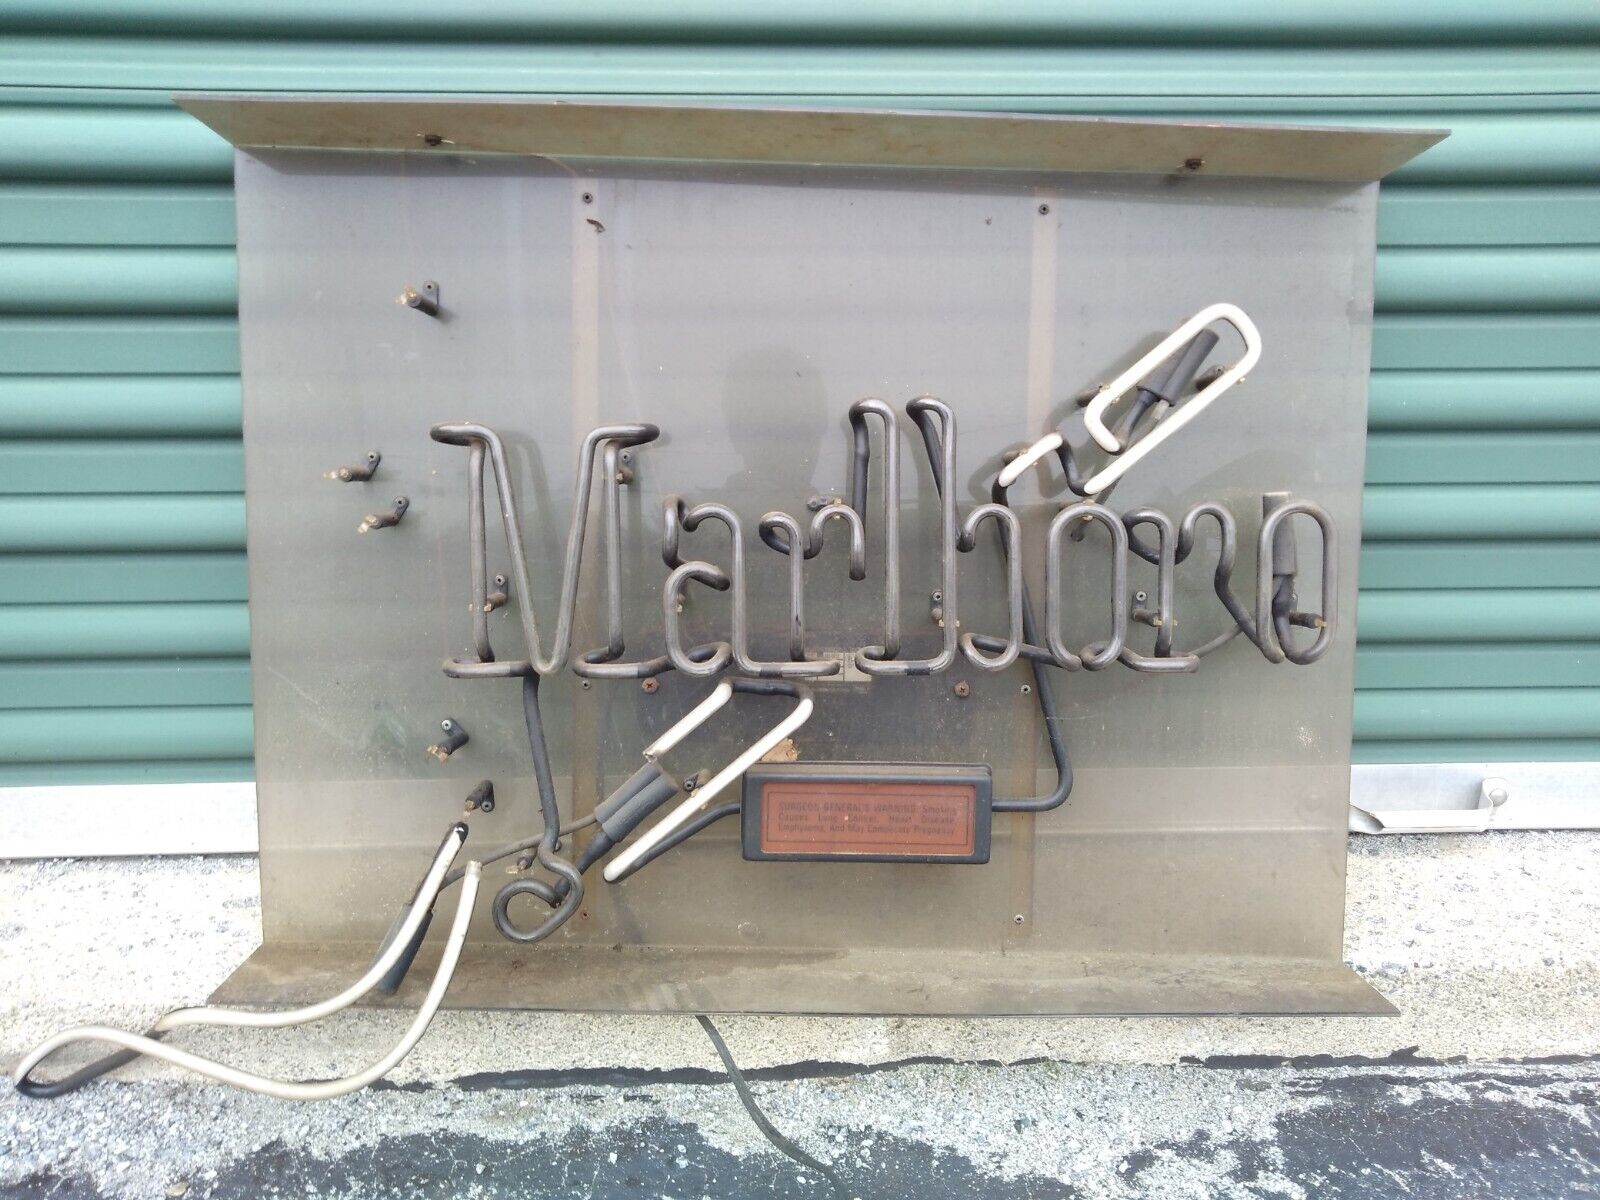 Marlboro Cigarettes Vintage Neon Advertising Man Cave